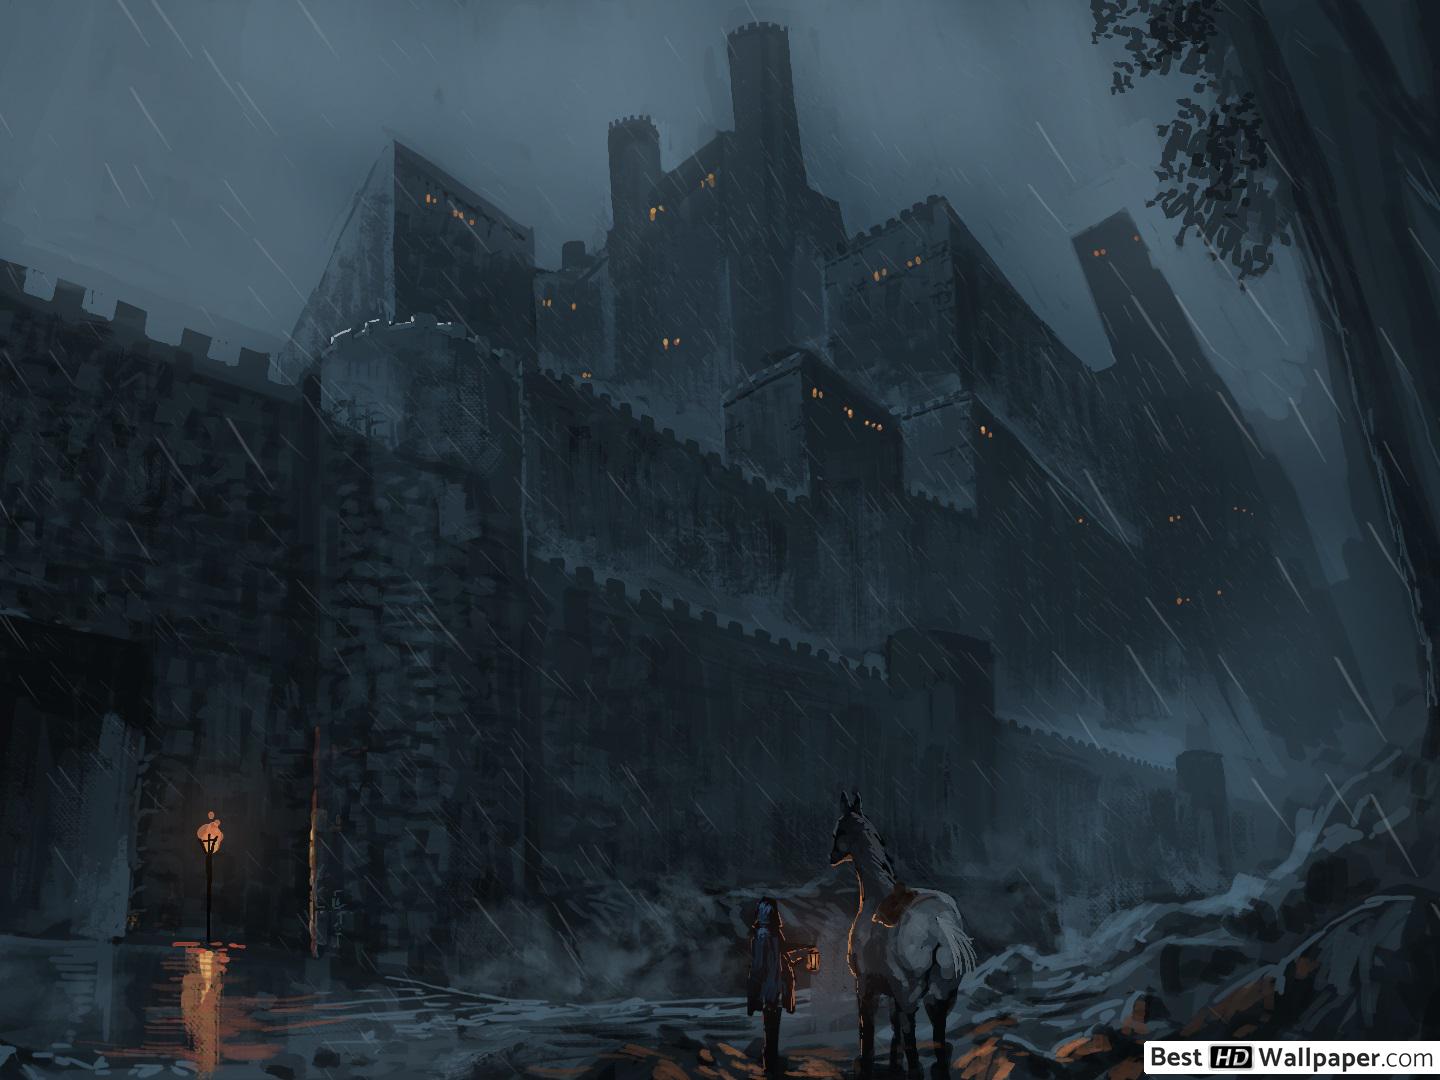 Dark Castle HD wallpaper download